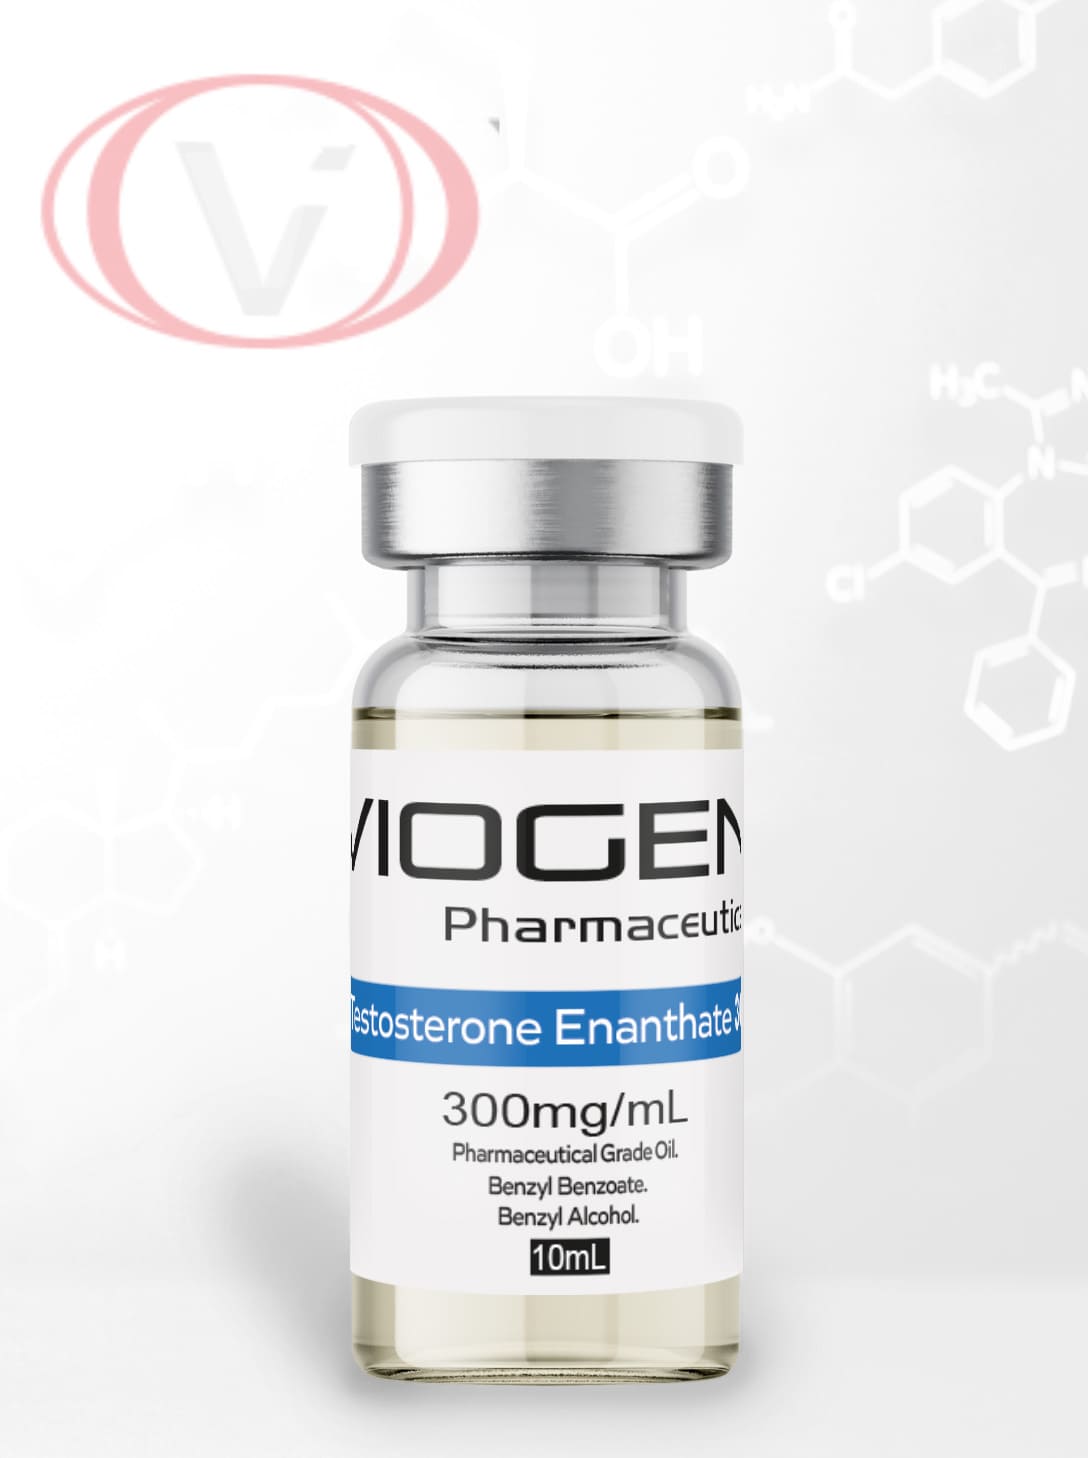 Testosterone Enanthate 250 Mg 10 Ml Viogen Pharma